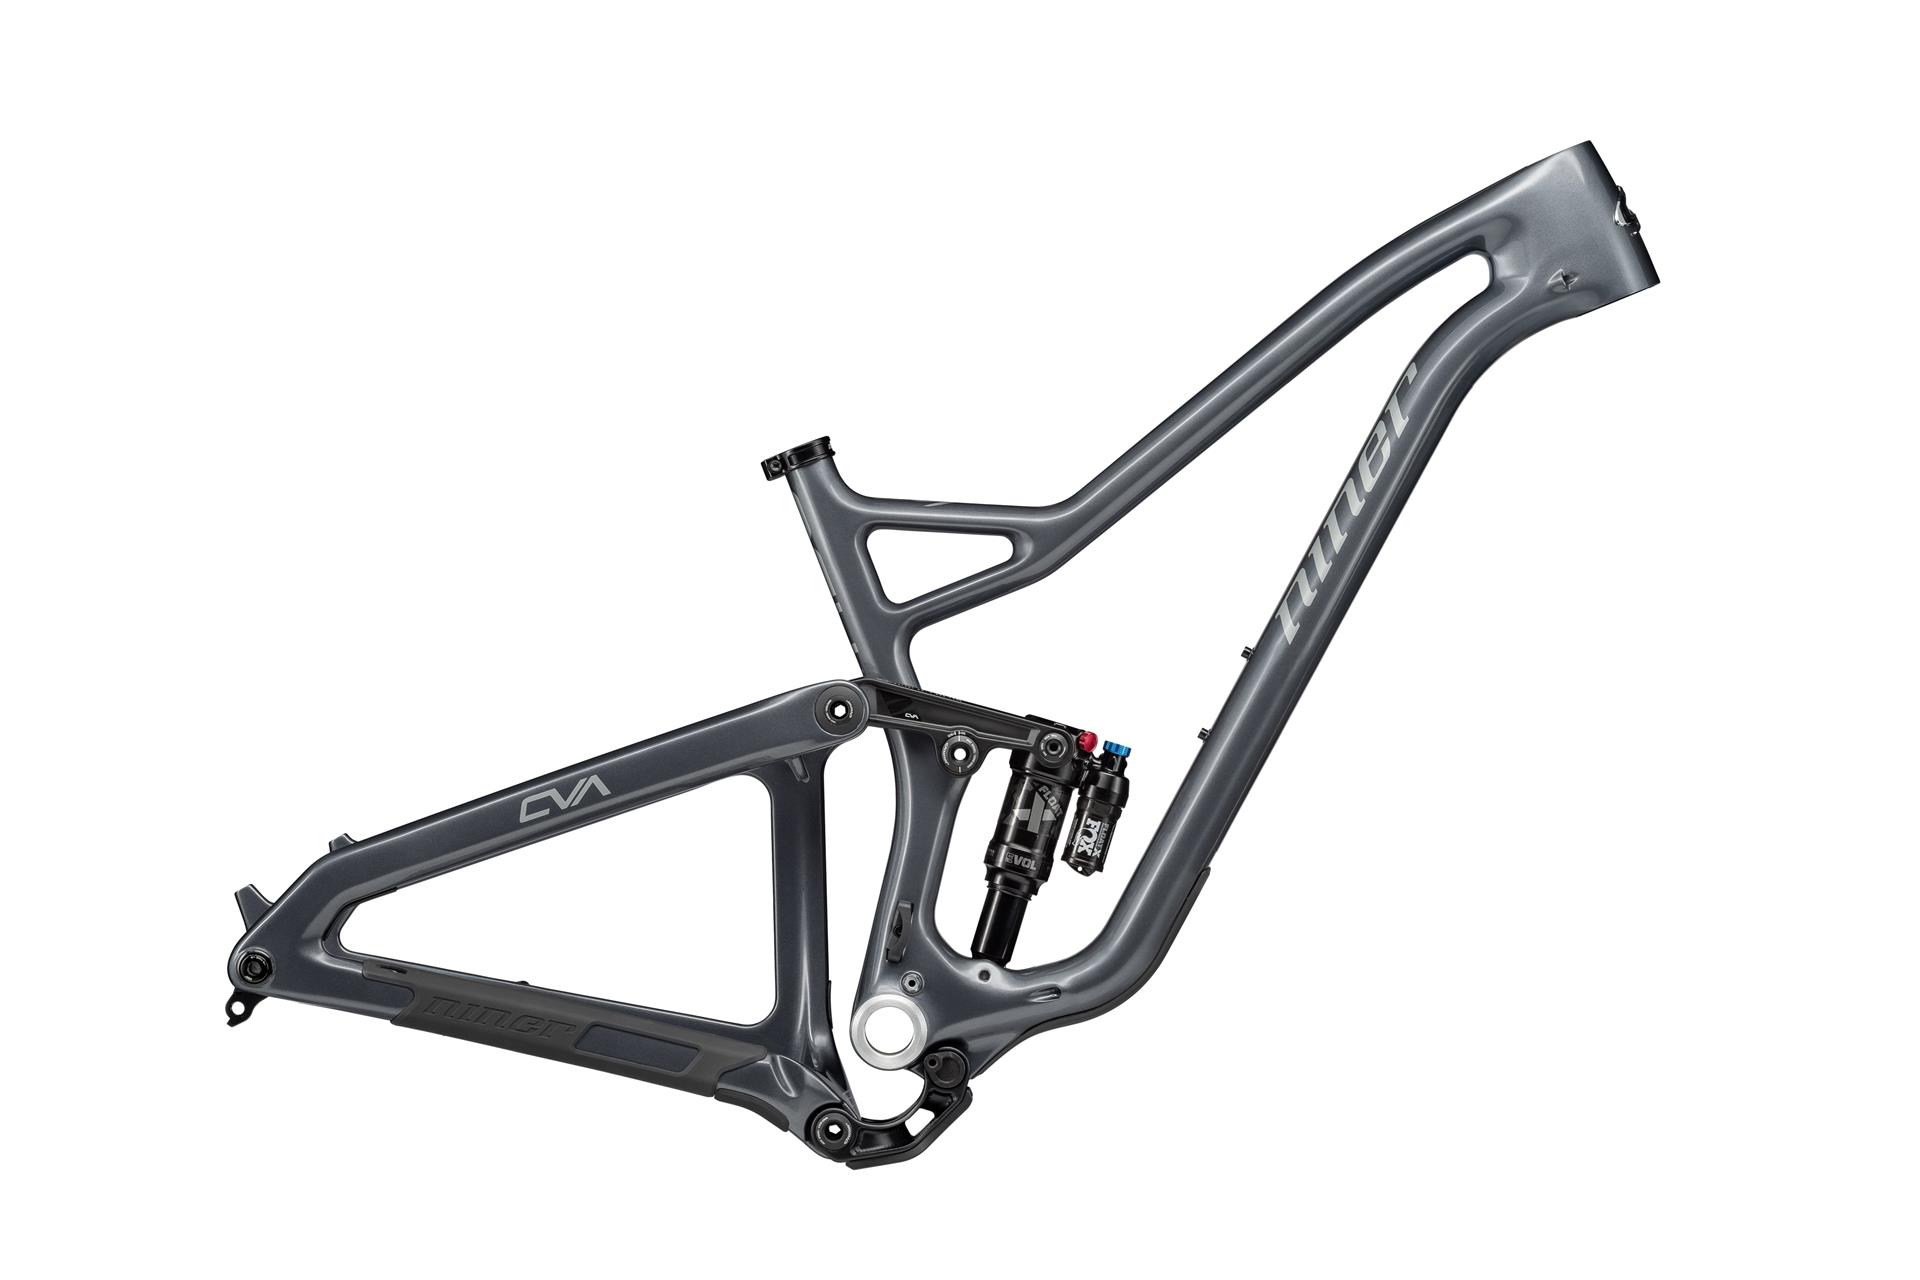 Niner JET RDO 2-star велосипед, Магнитный серый, XL